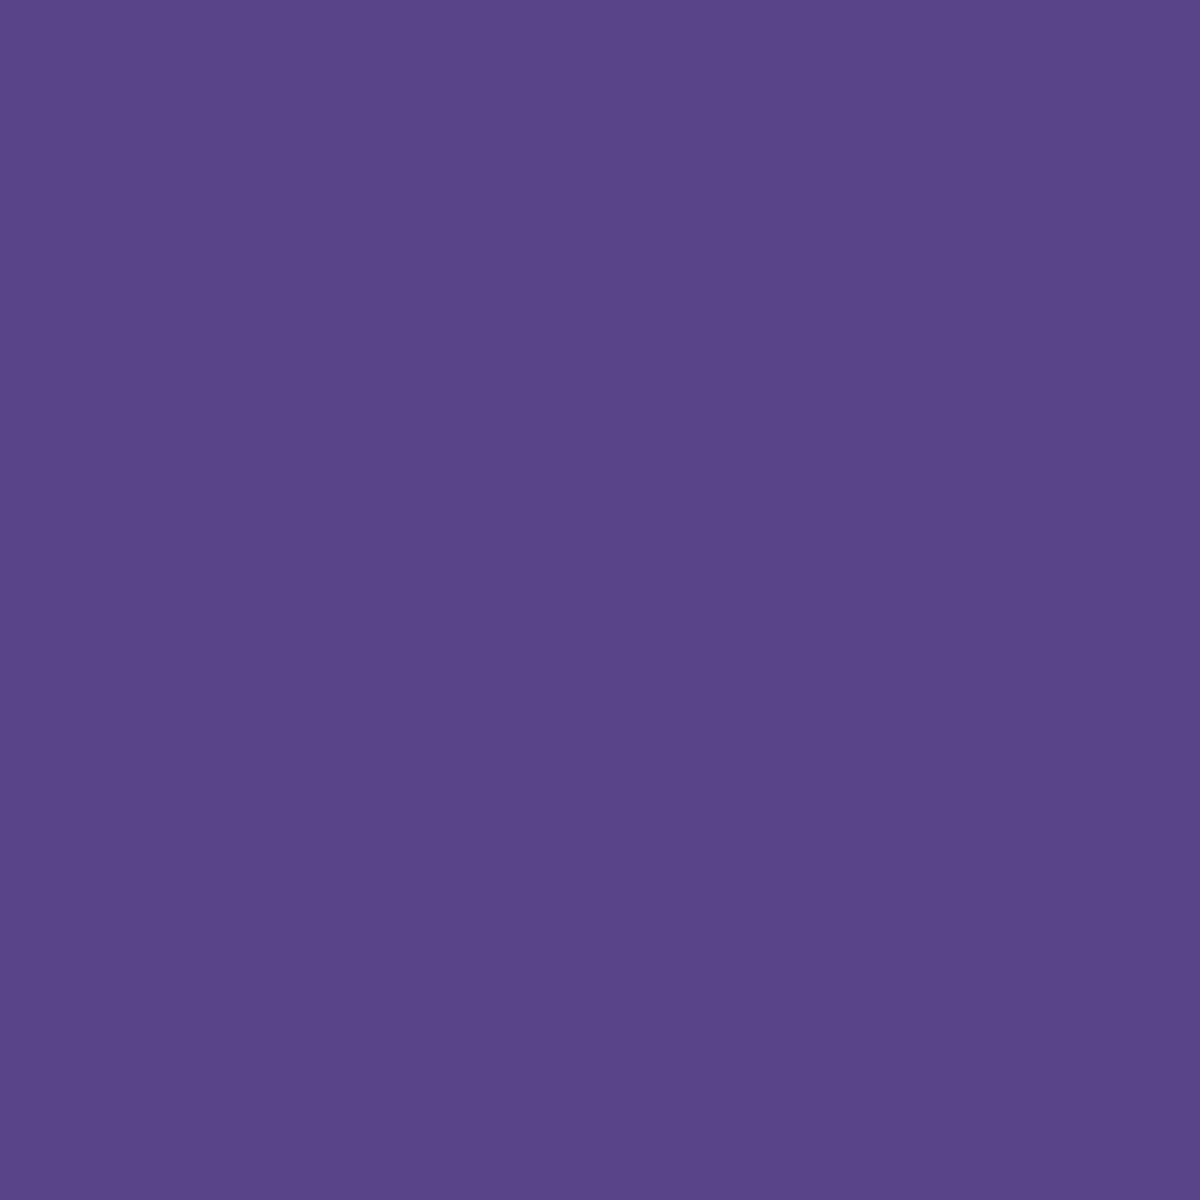 Swatch Sample of Signoria Raffaello Bedding in Violet Color